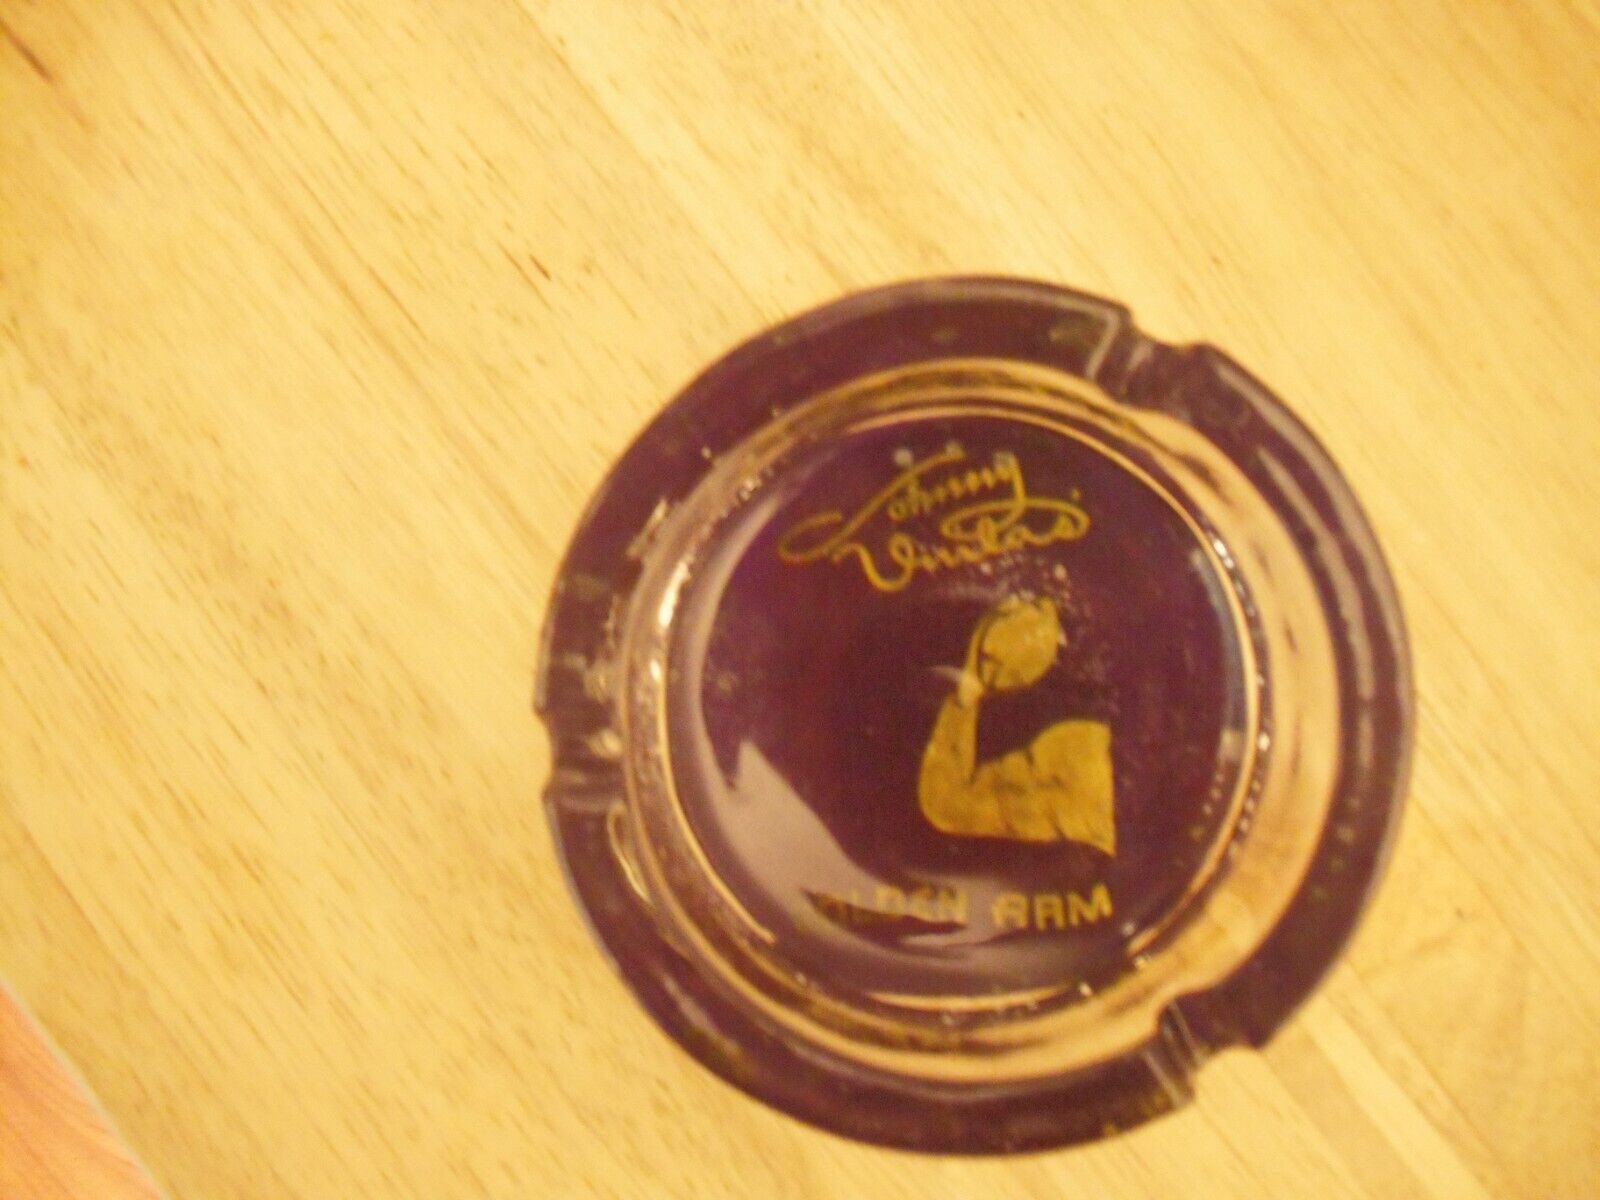 Johnny Unitas "golden Arm" Restaurant Novelty Glass Ashtray